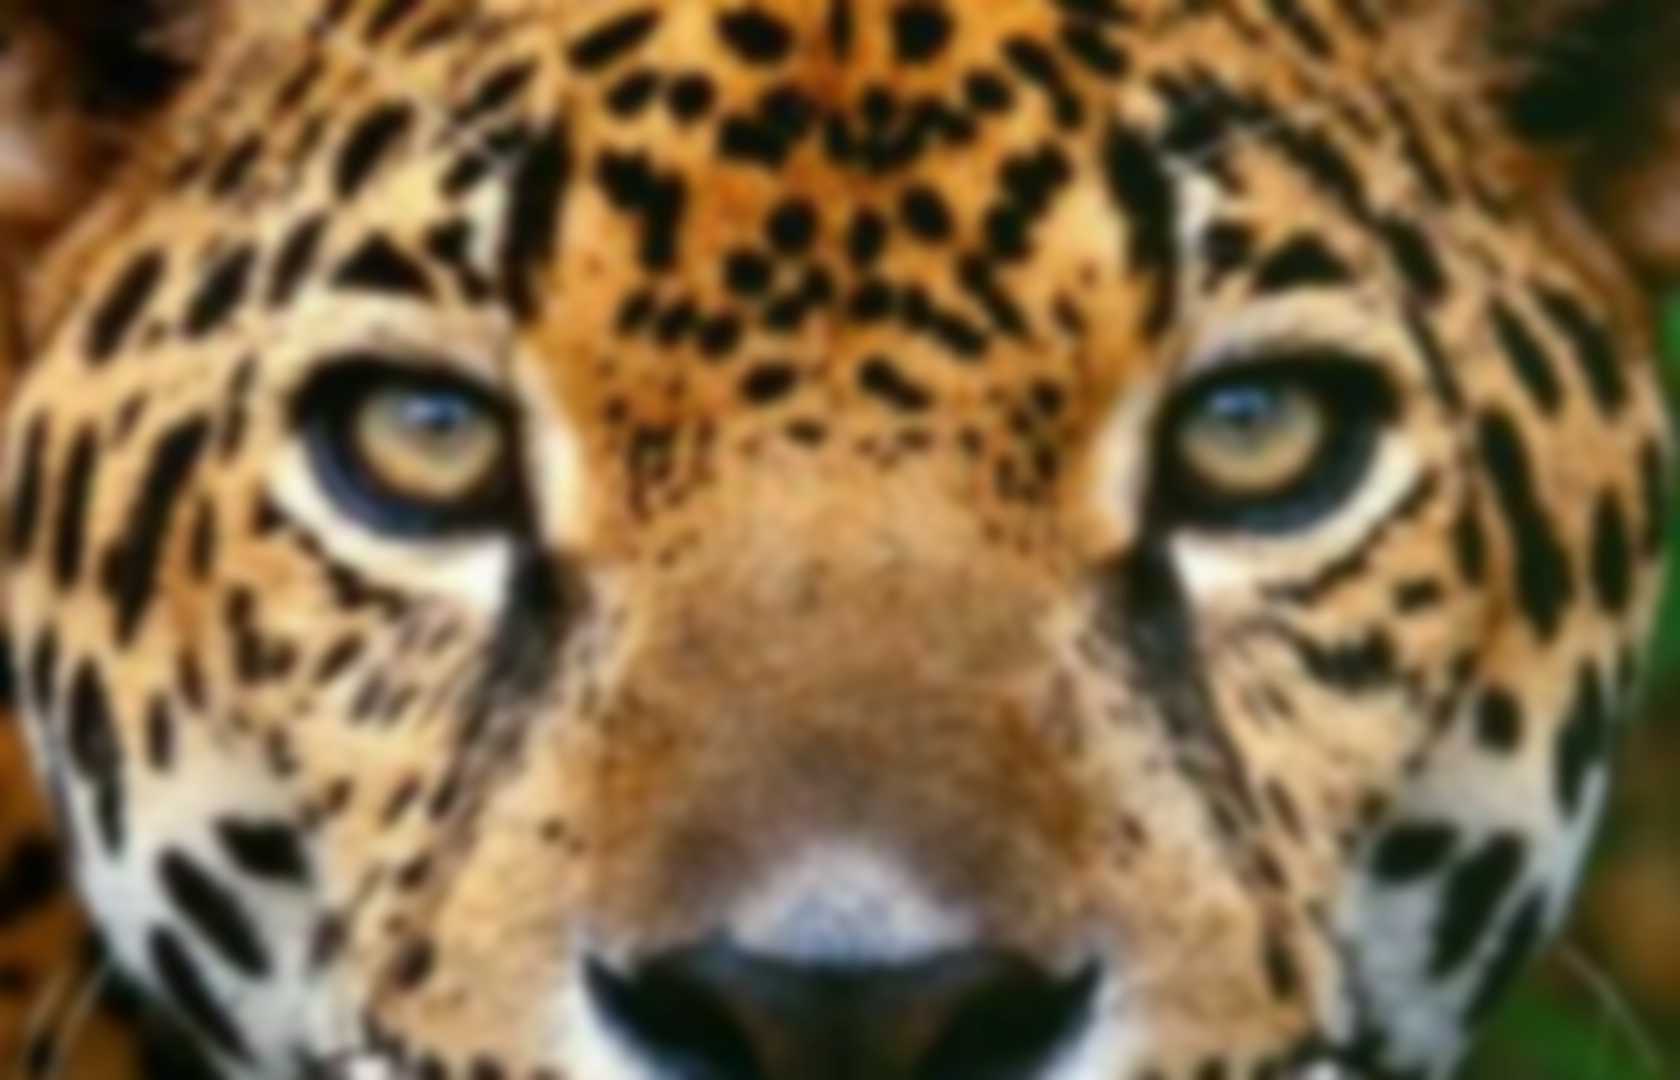 my jaguar incontrol